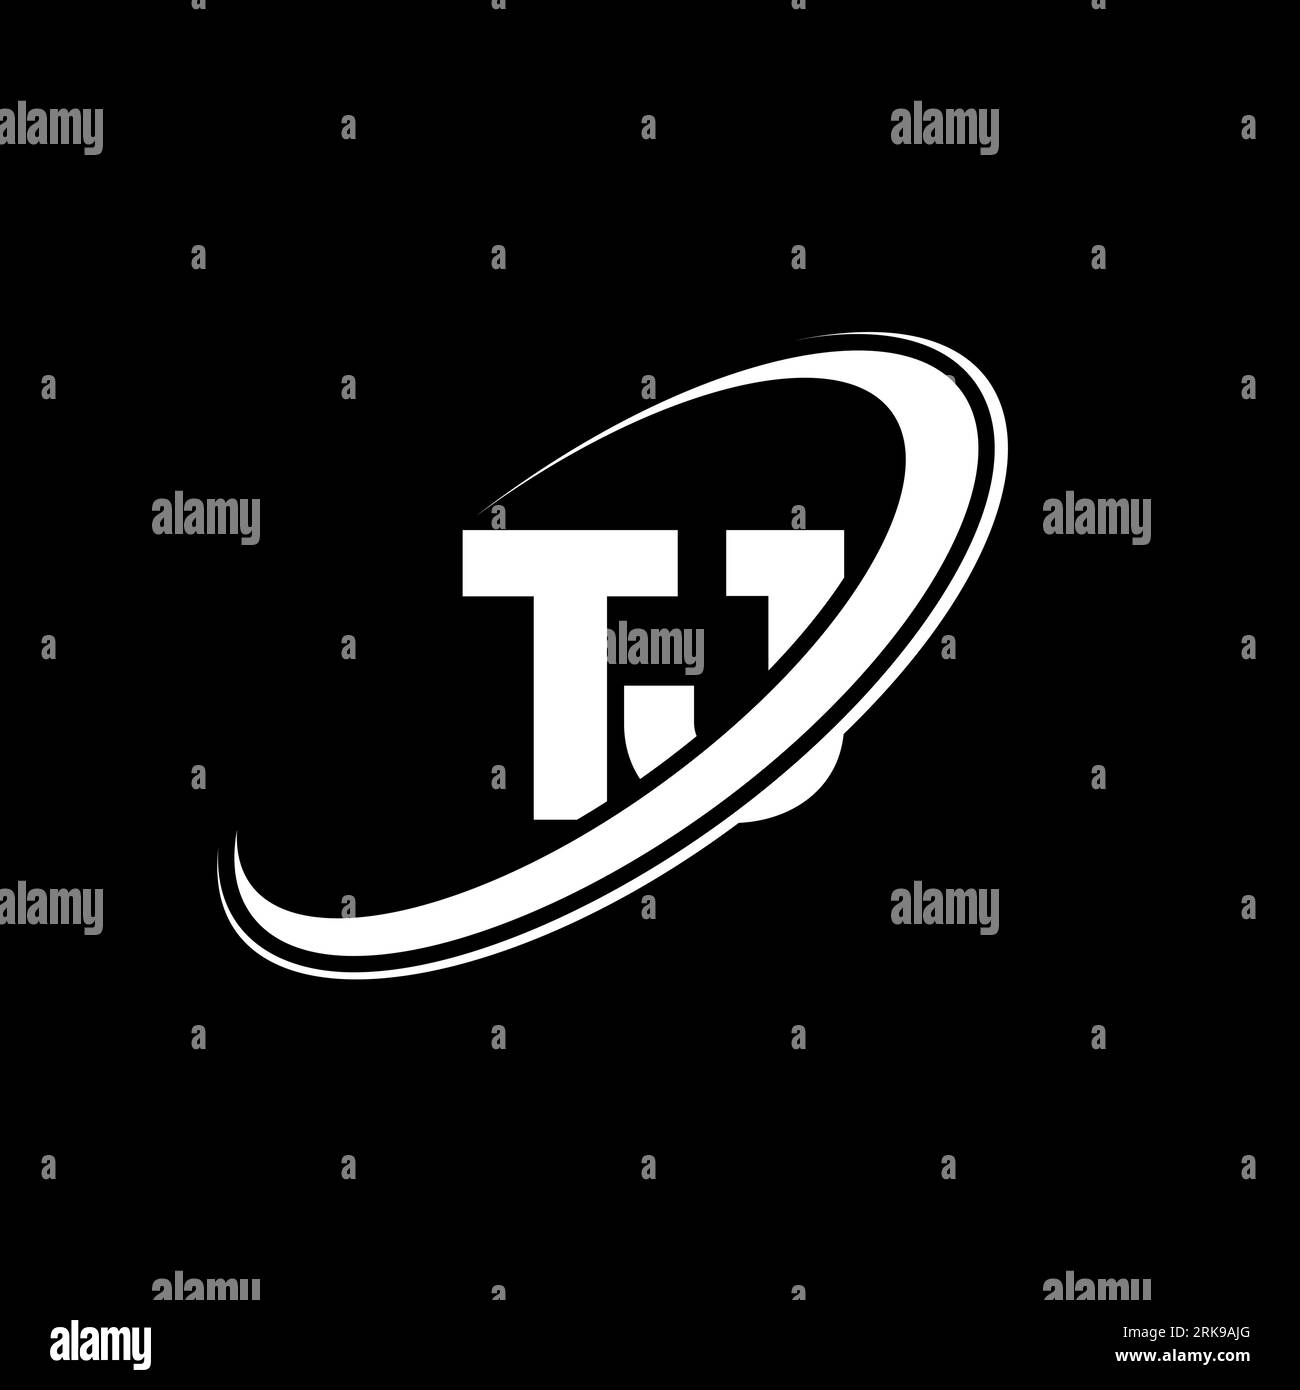 Tj logo Black and White Stock Photos & Images - Alamy